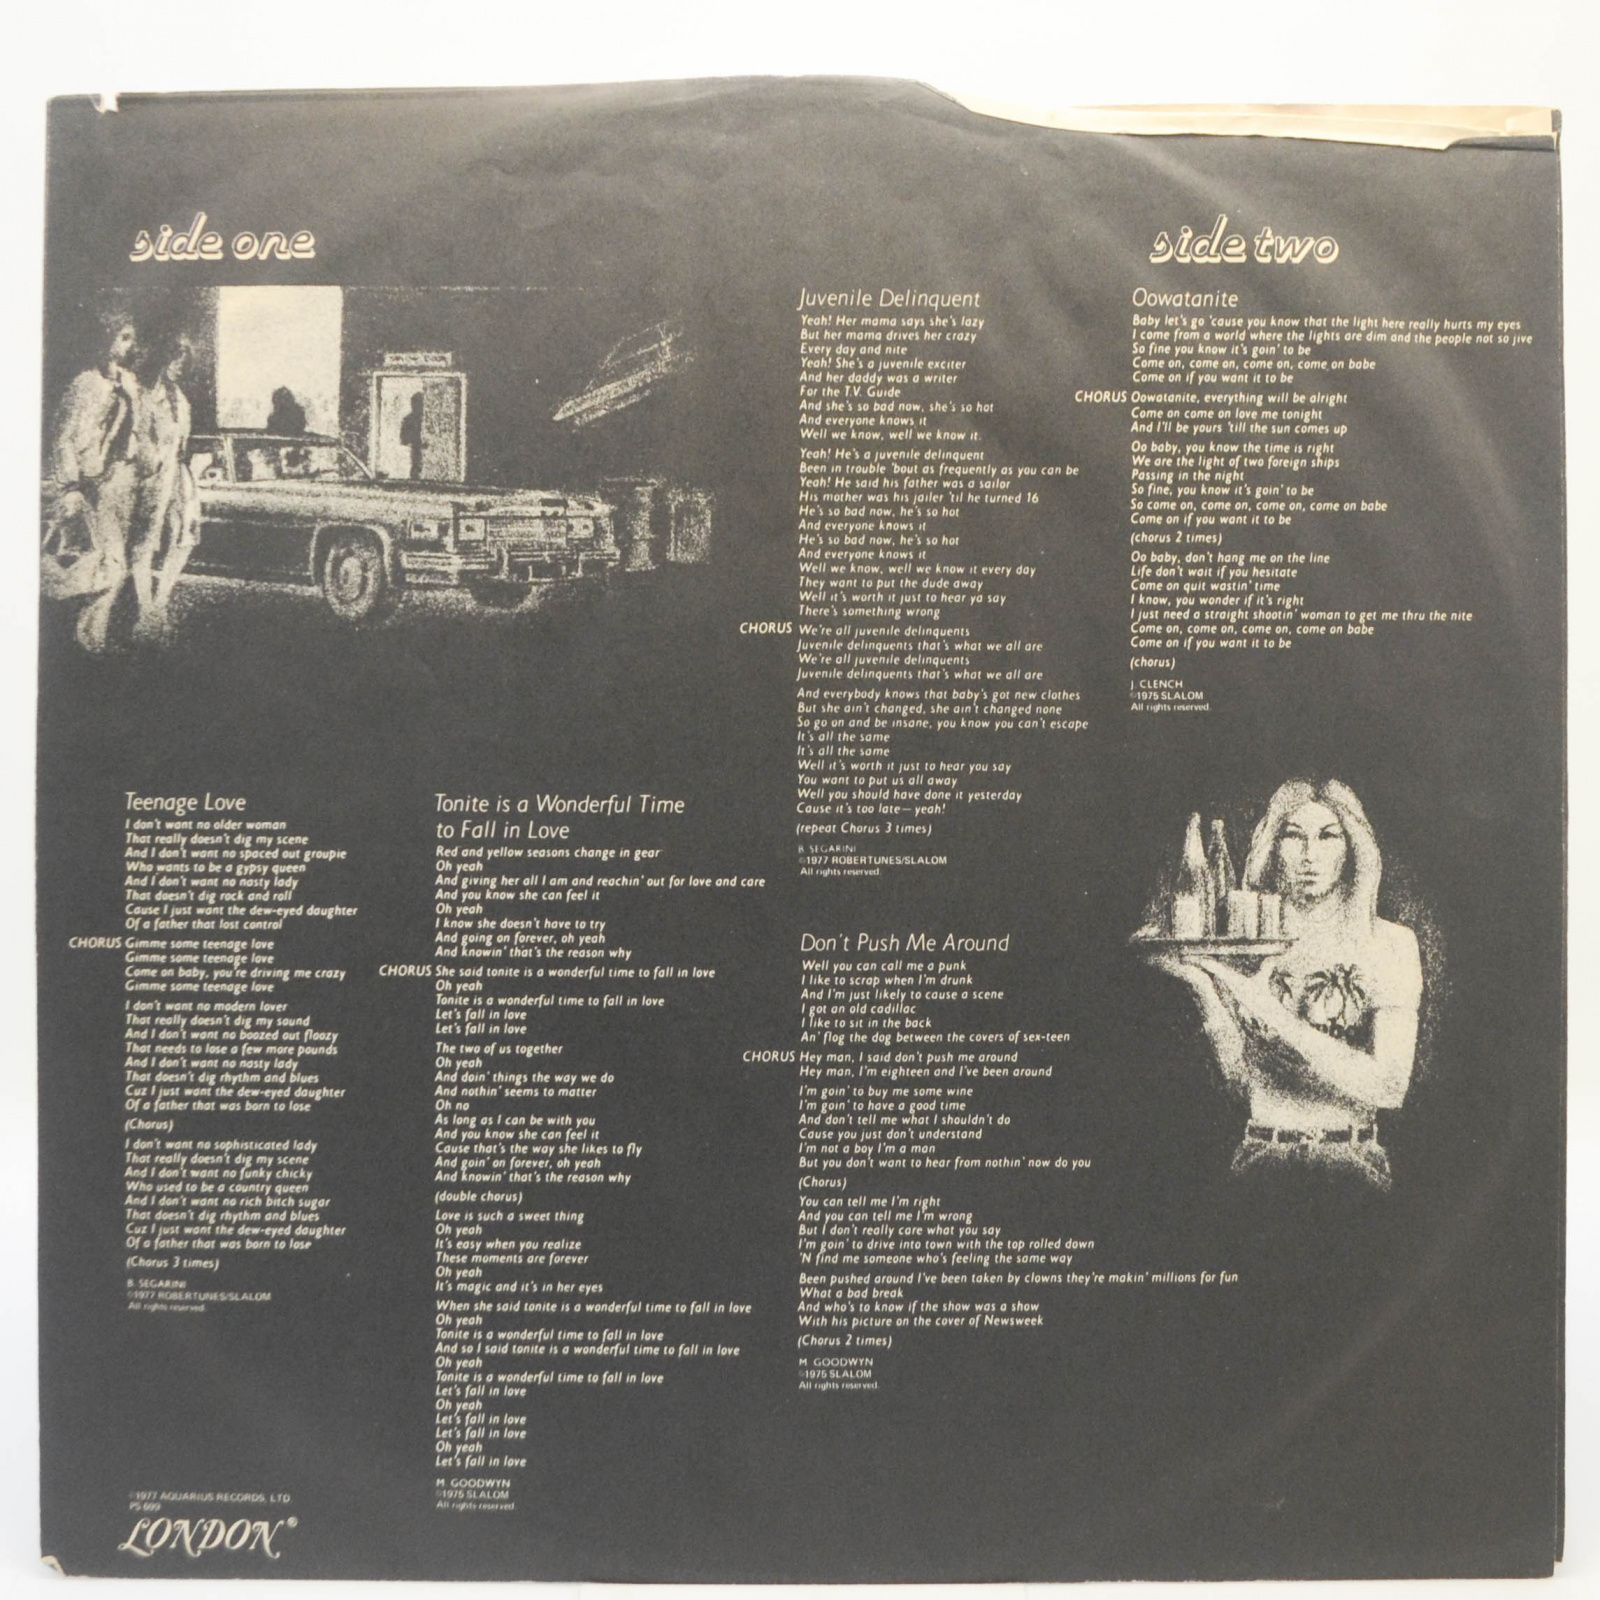 April Wine — Live At The El Mocambo (USA), 1977